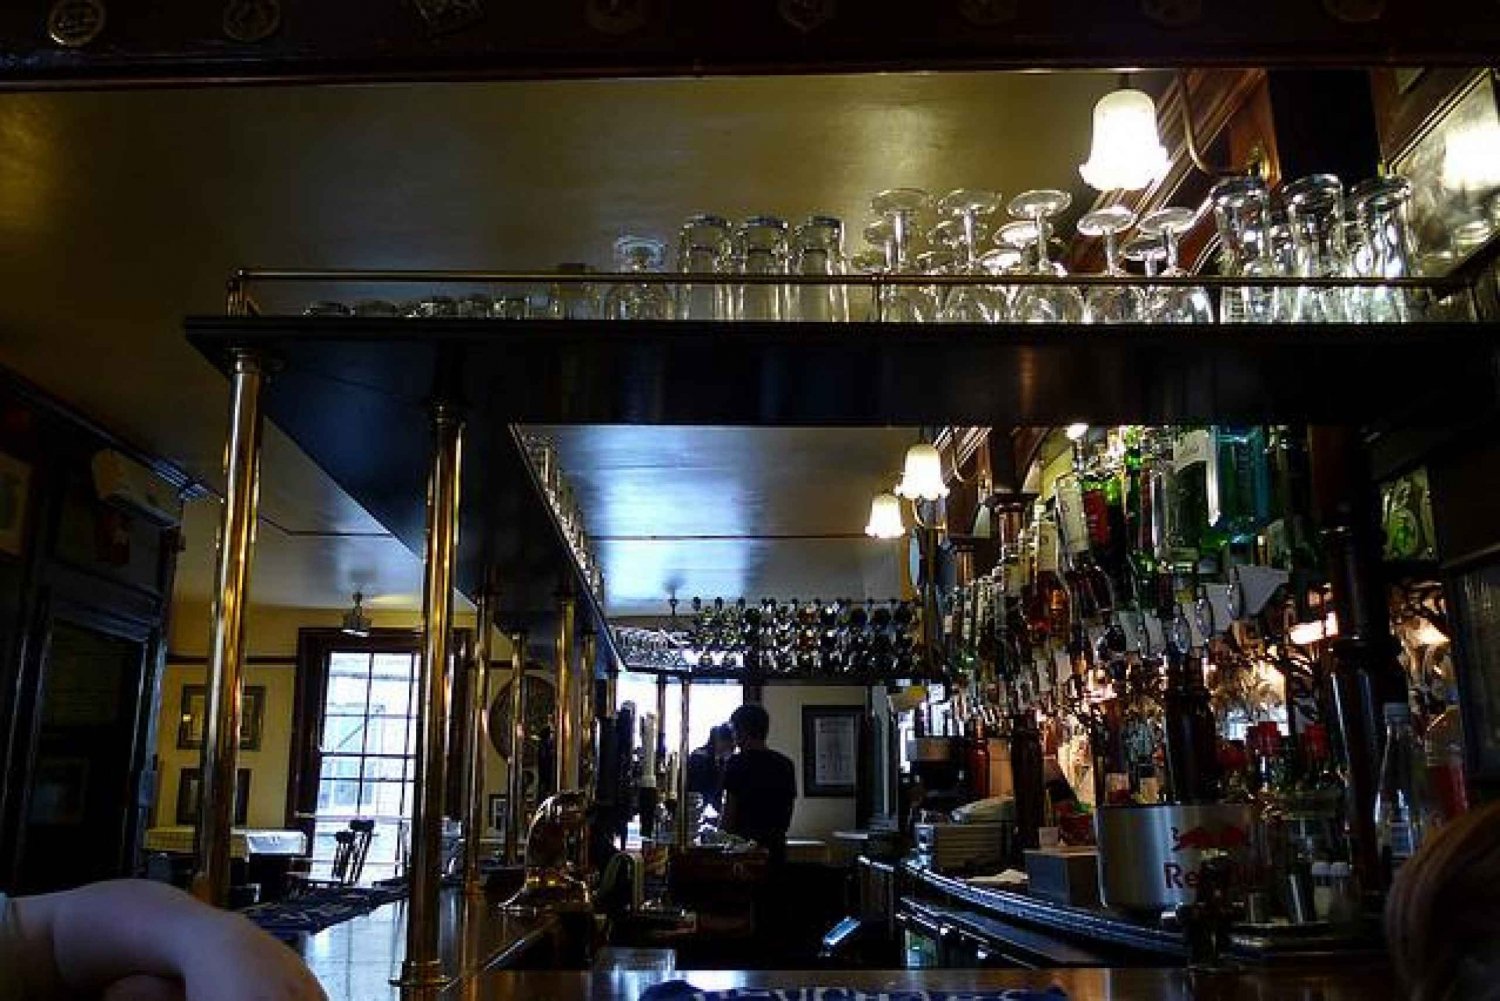 Londres: visita de 2 horas a un pub histórico